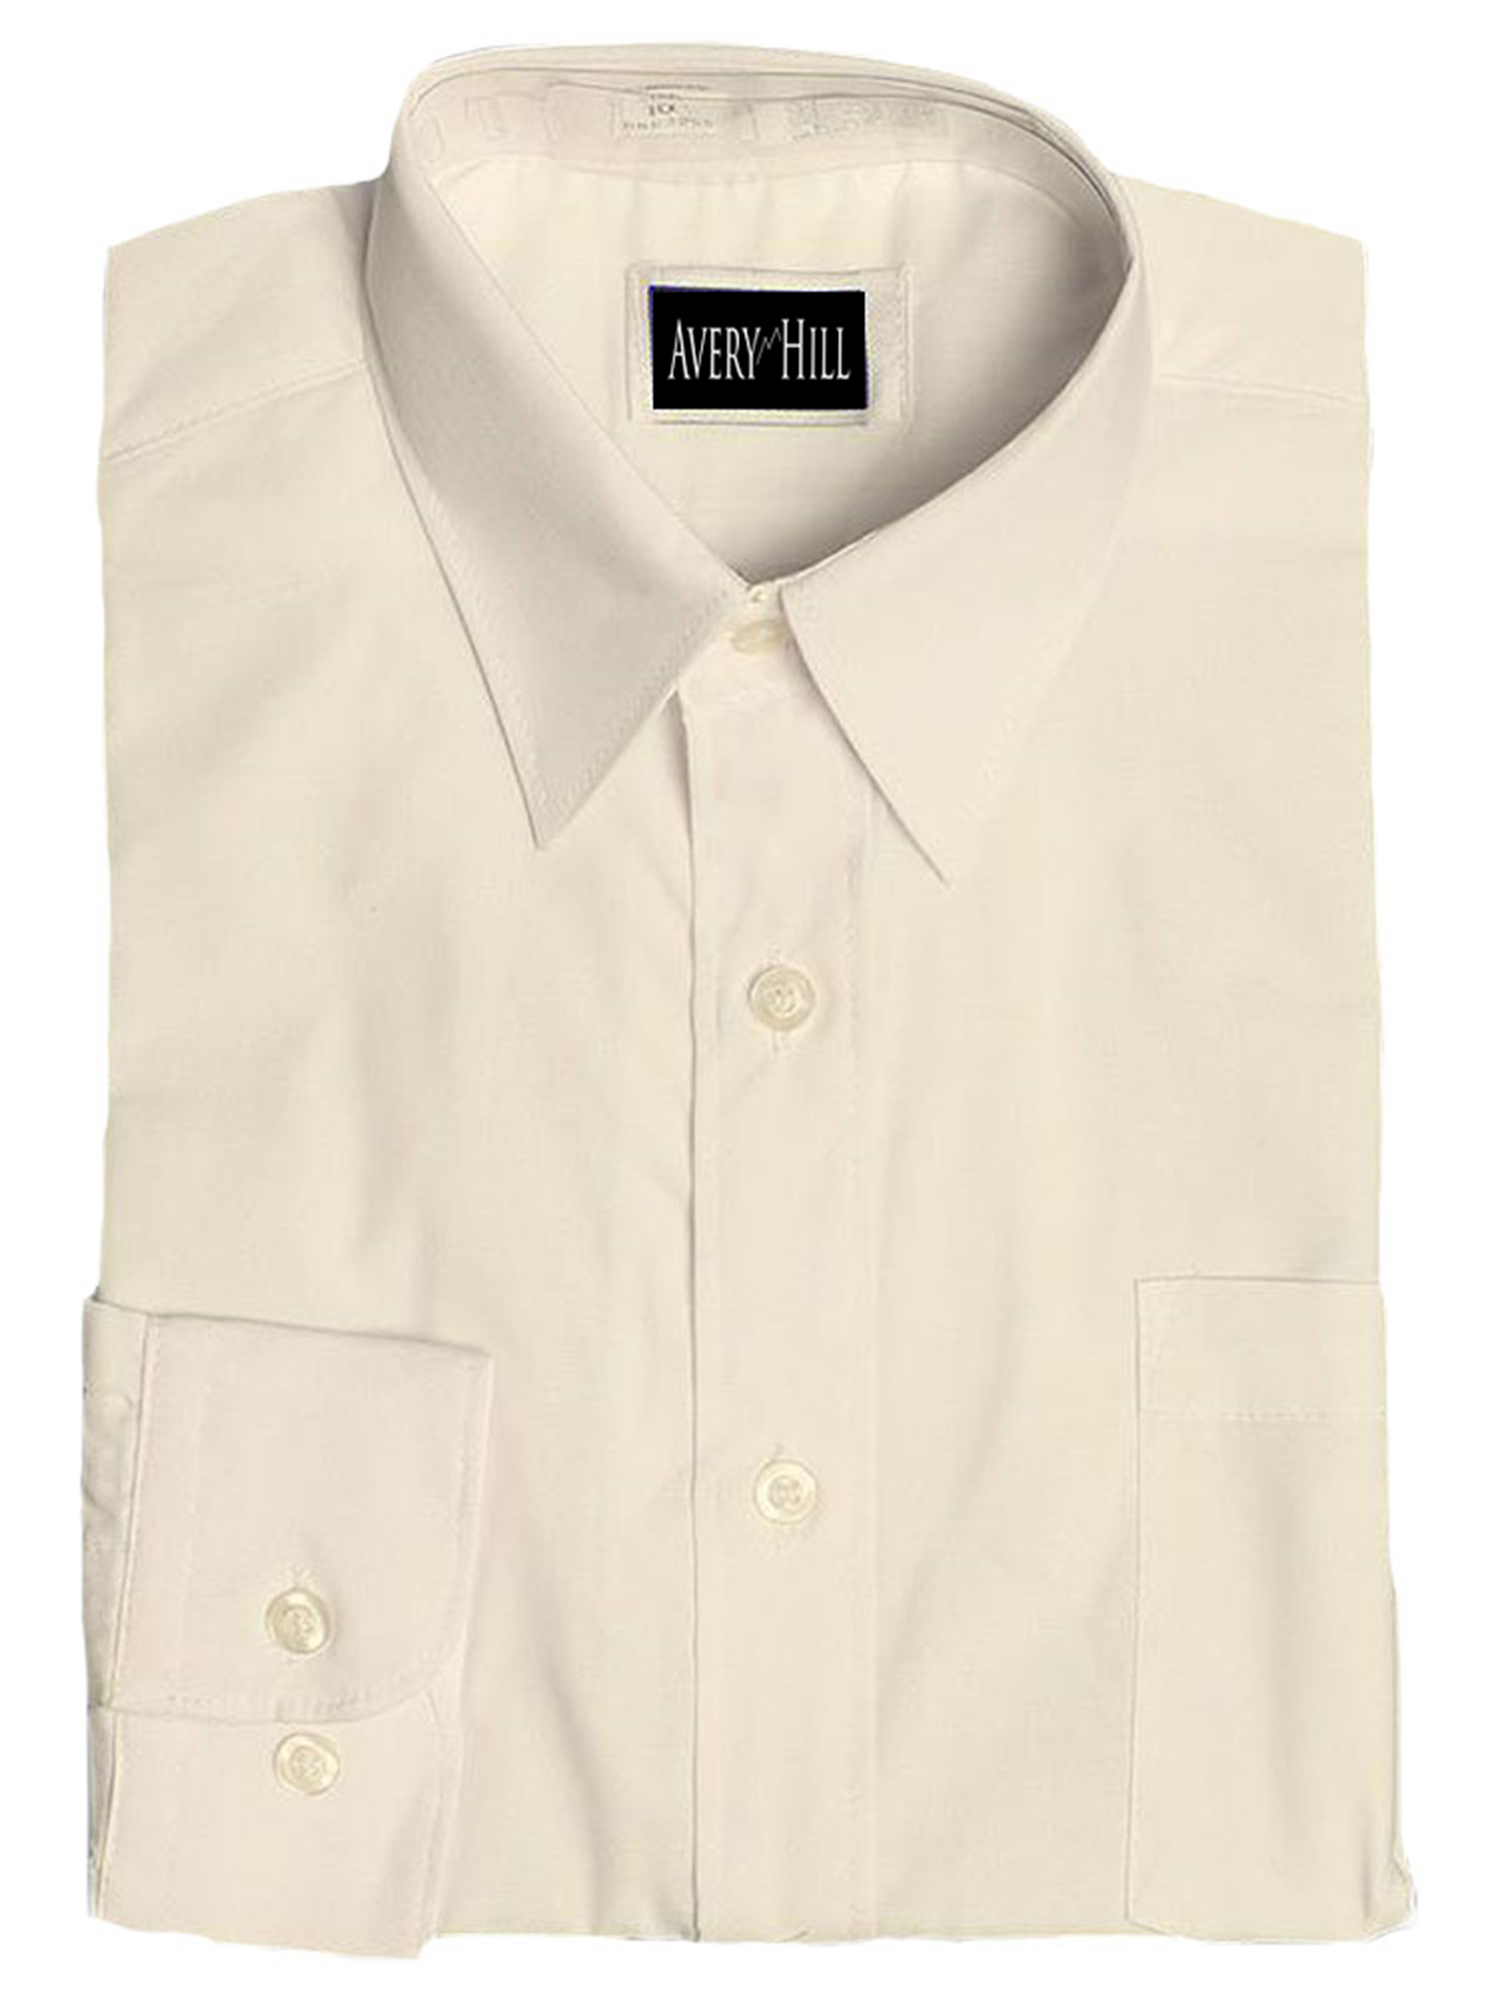 Boys White or Ivory Long Sleeve Wrinkle Resistant Dress Shirt IV 8